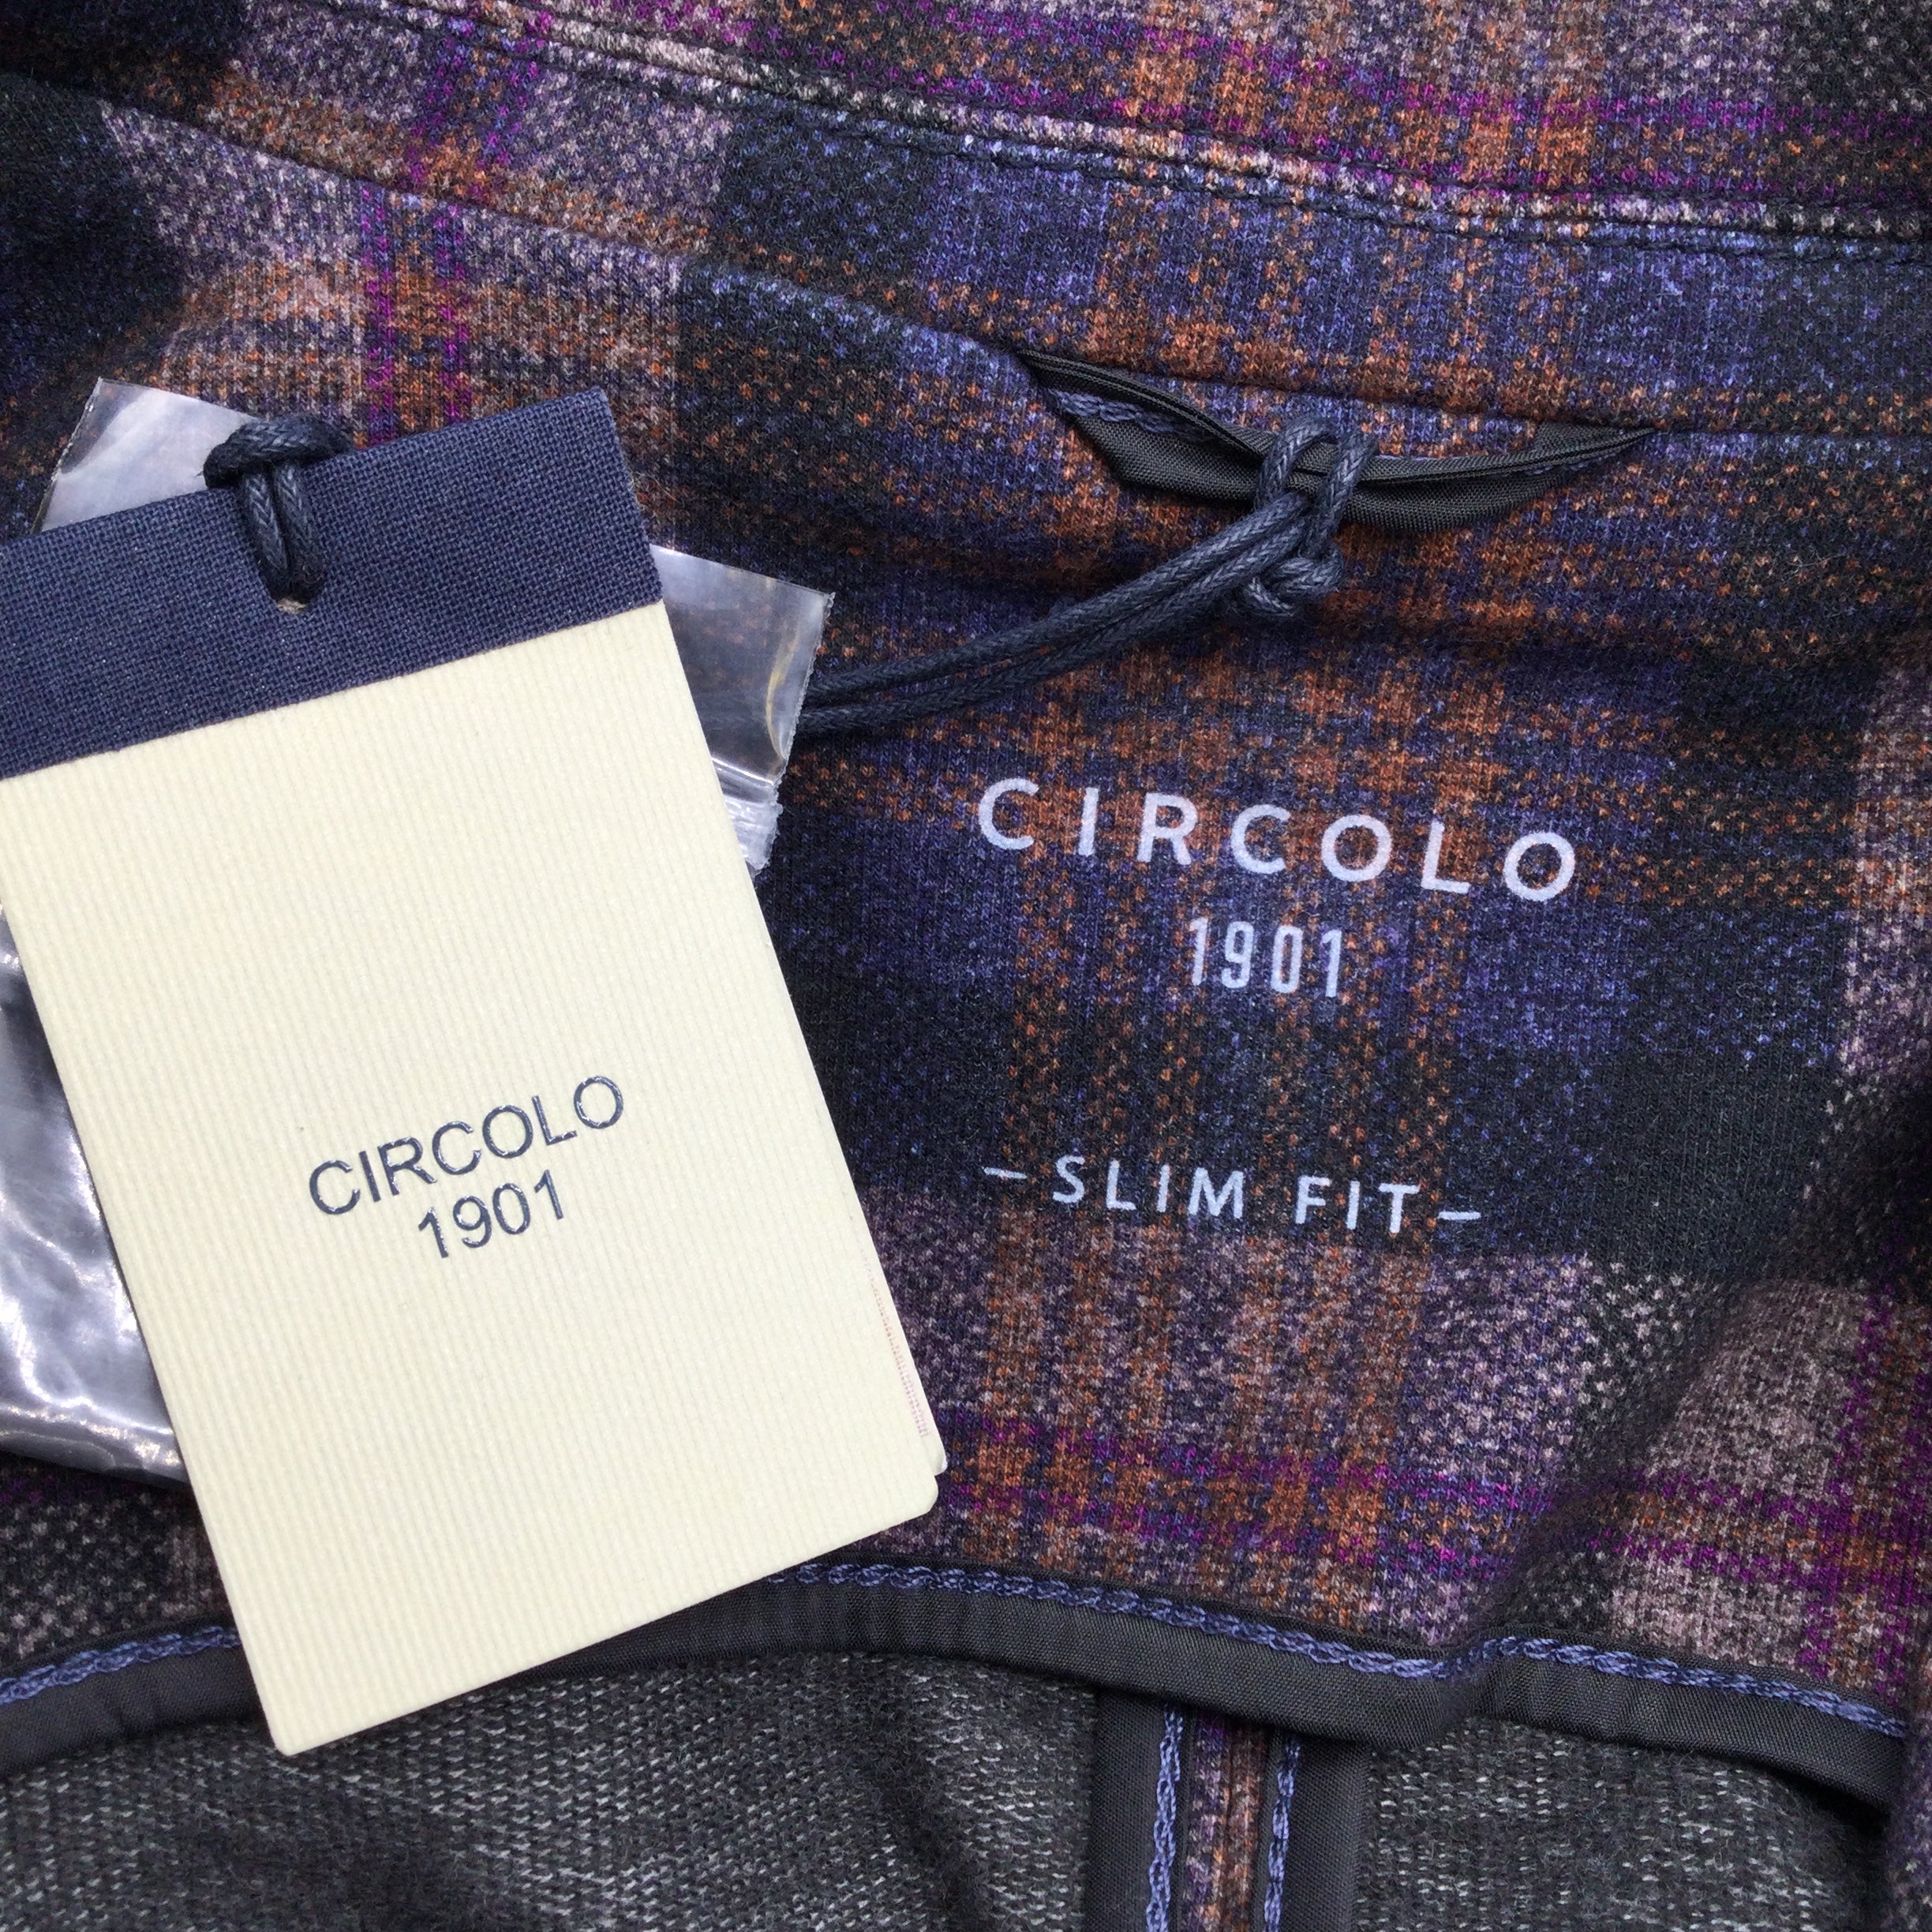 Circolo 1901 Purple / Blue Giacca Slim Fit Felpa Stretchy Cotton Blazer